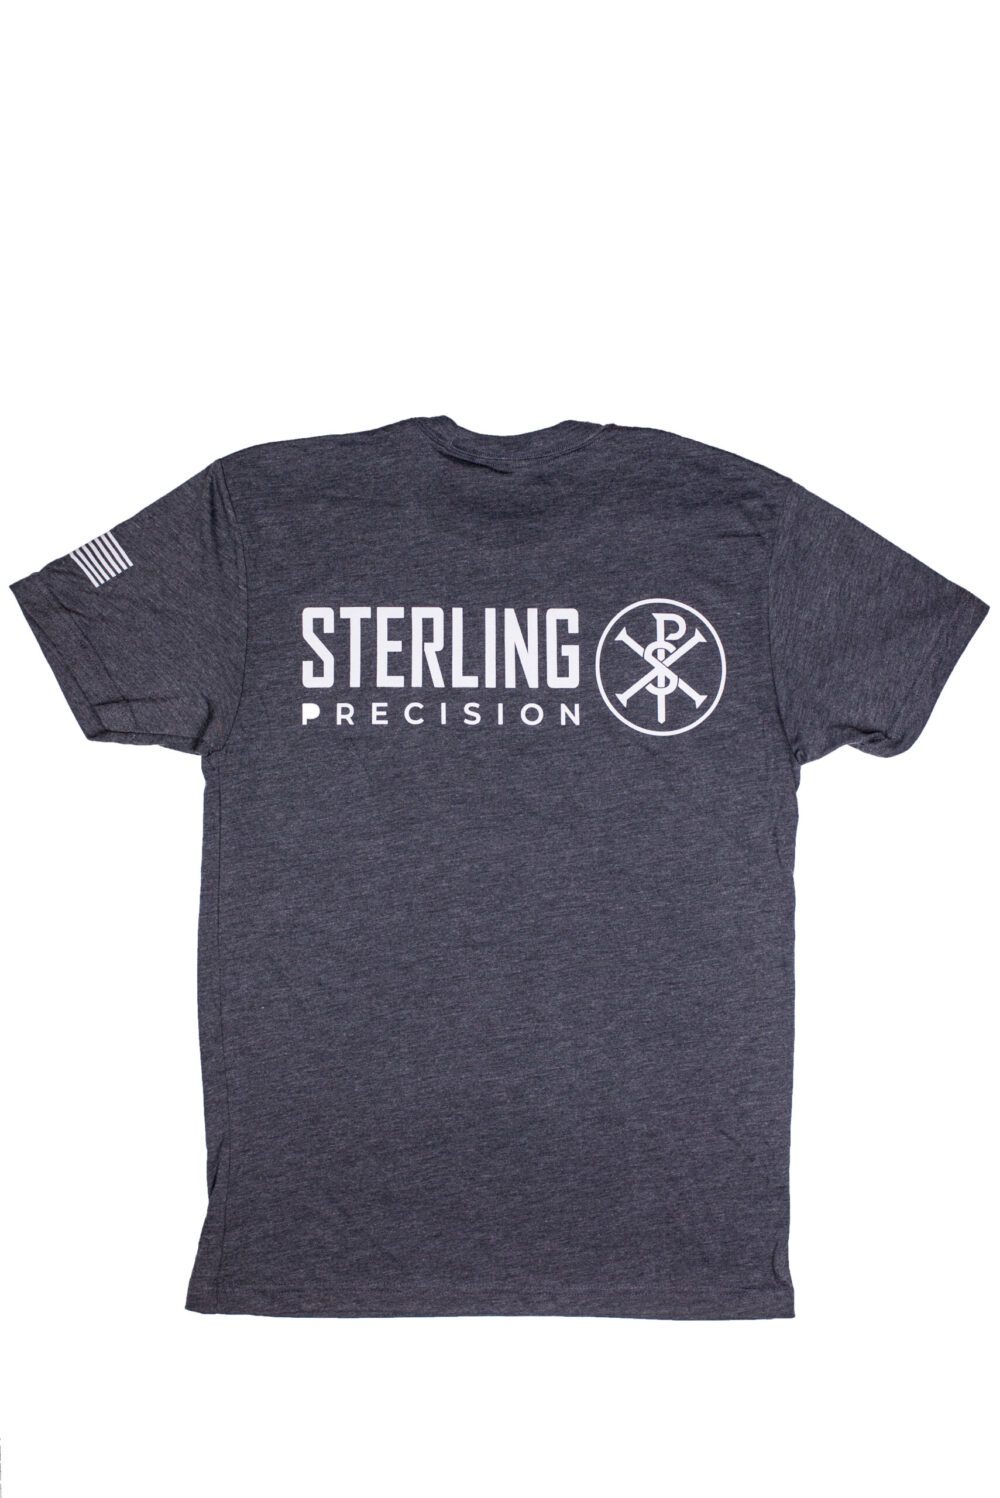 STERLING PRECISION T-shirt